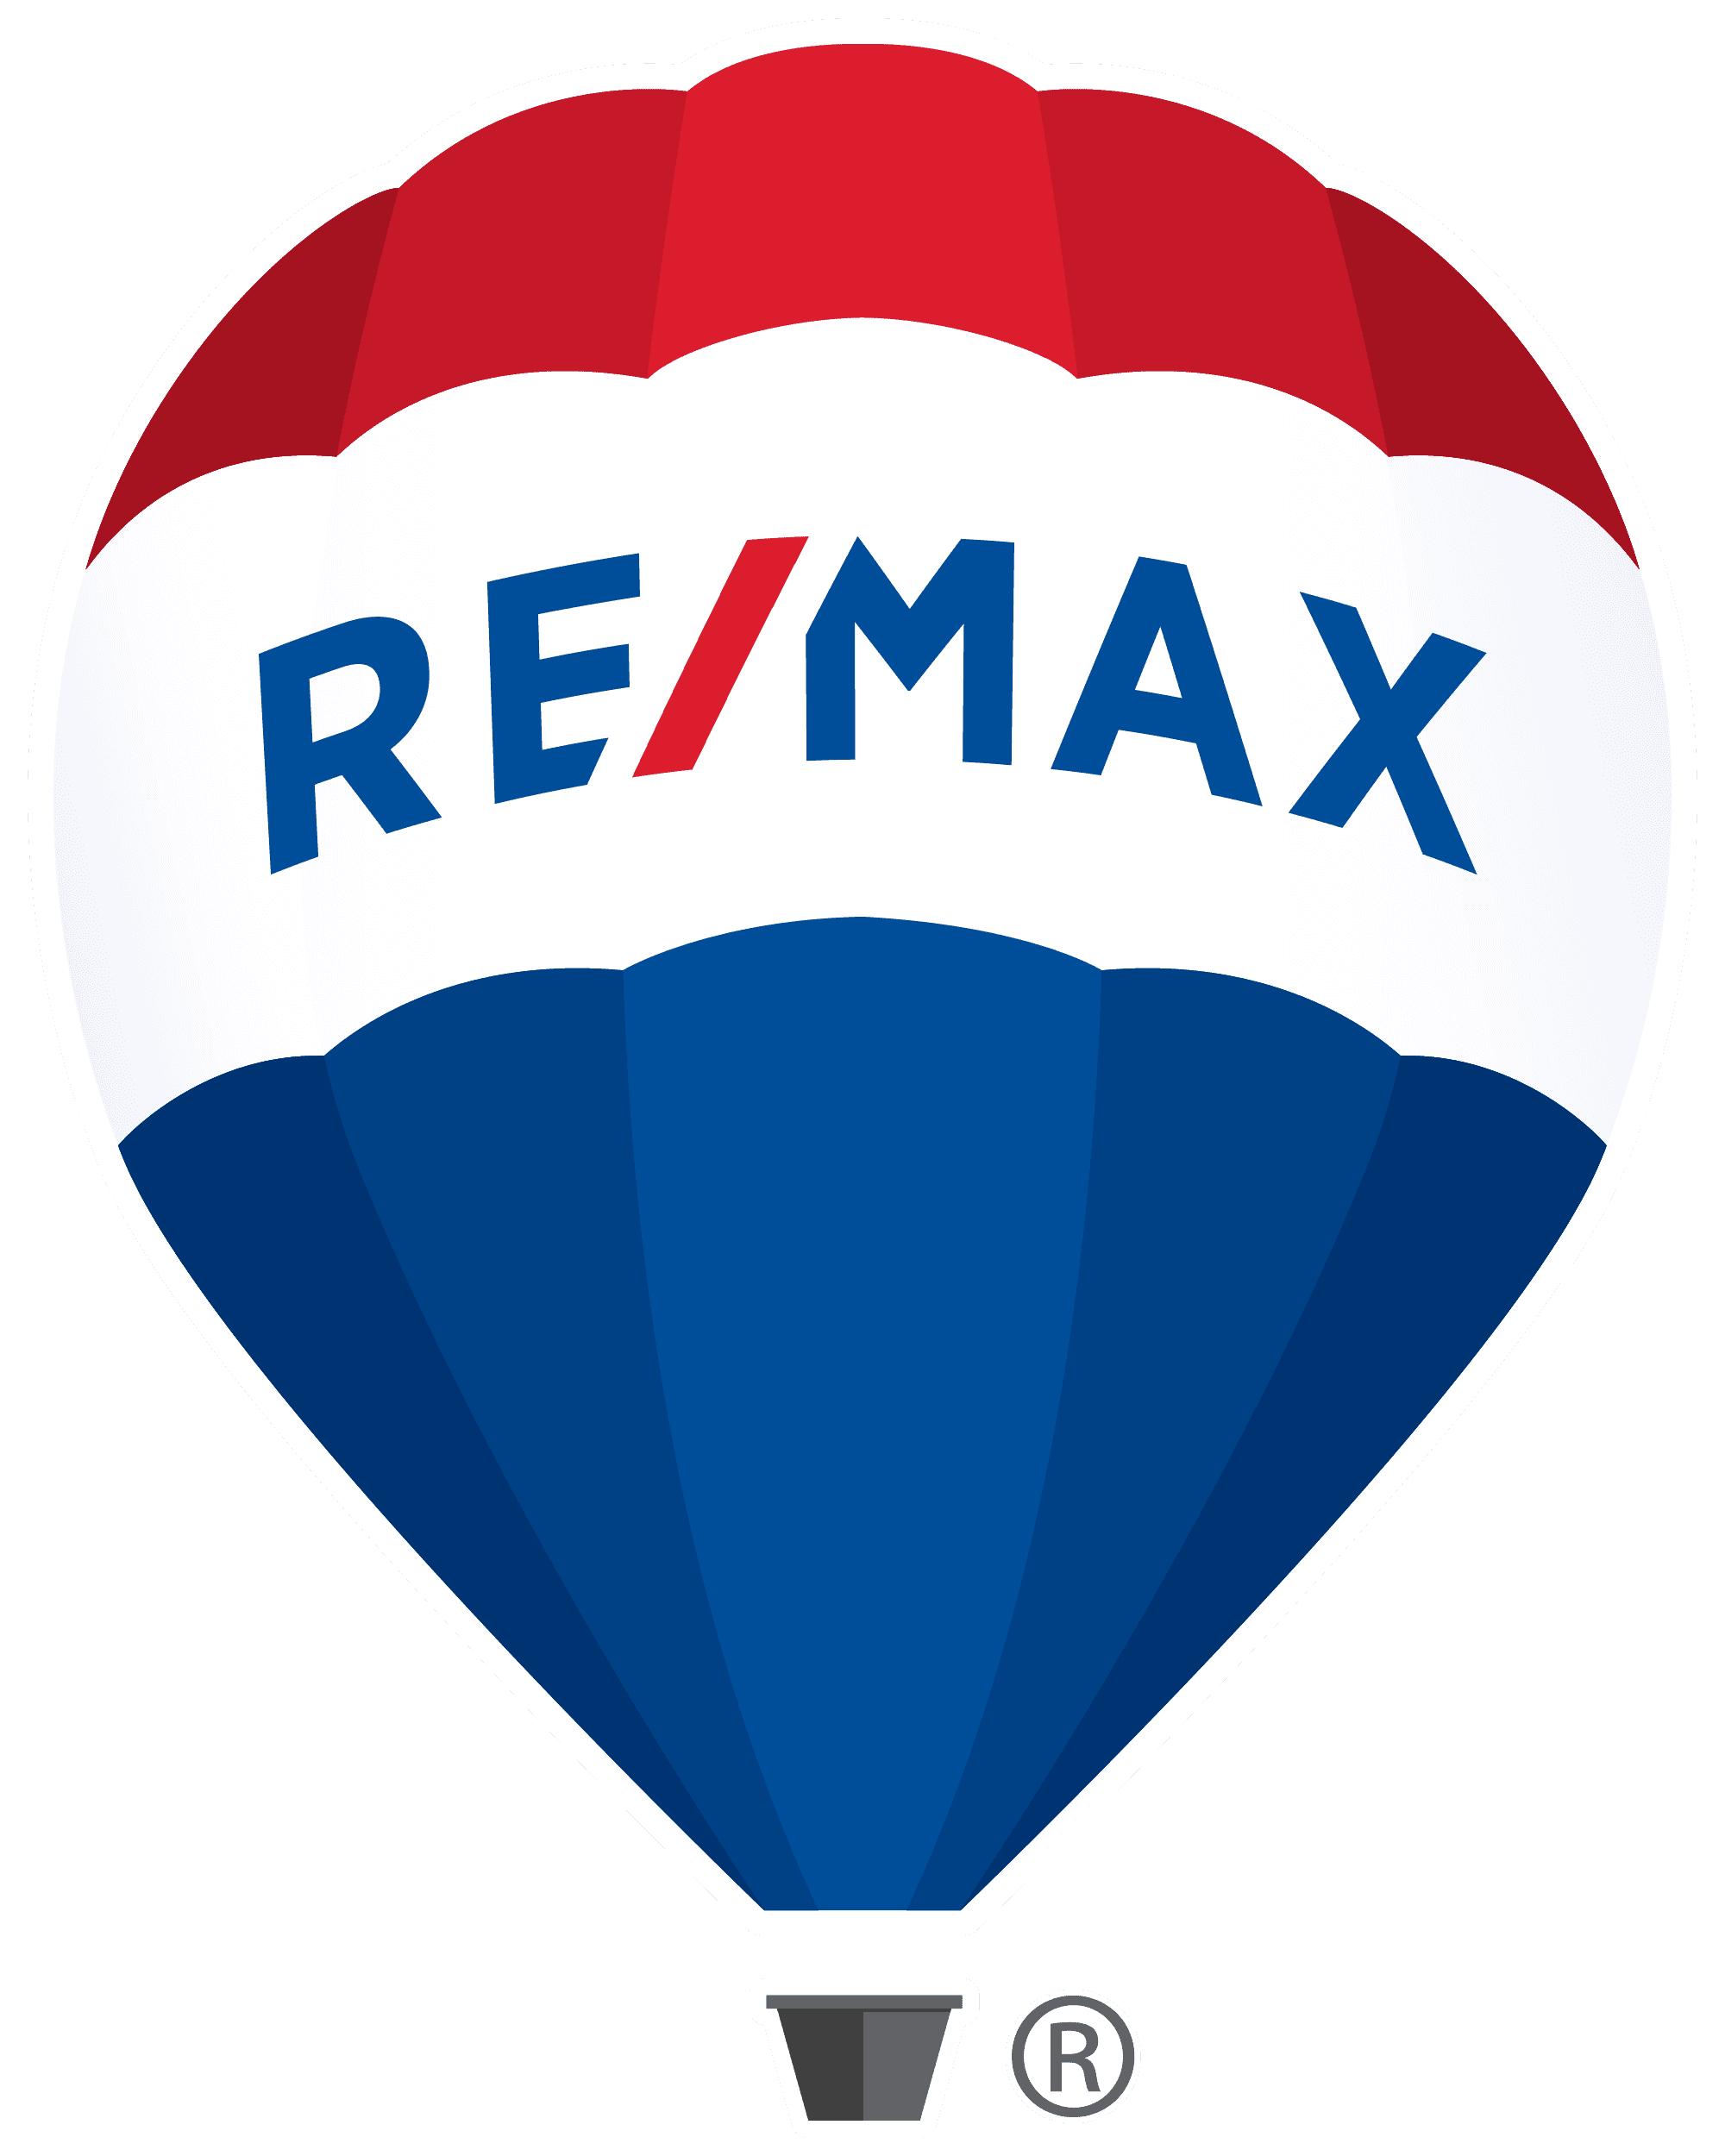 RE/MAX baloon logo